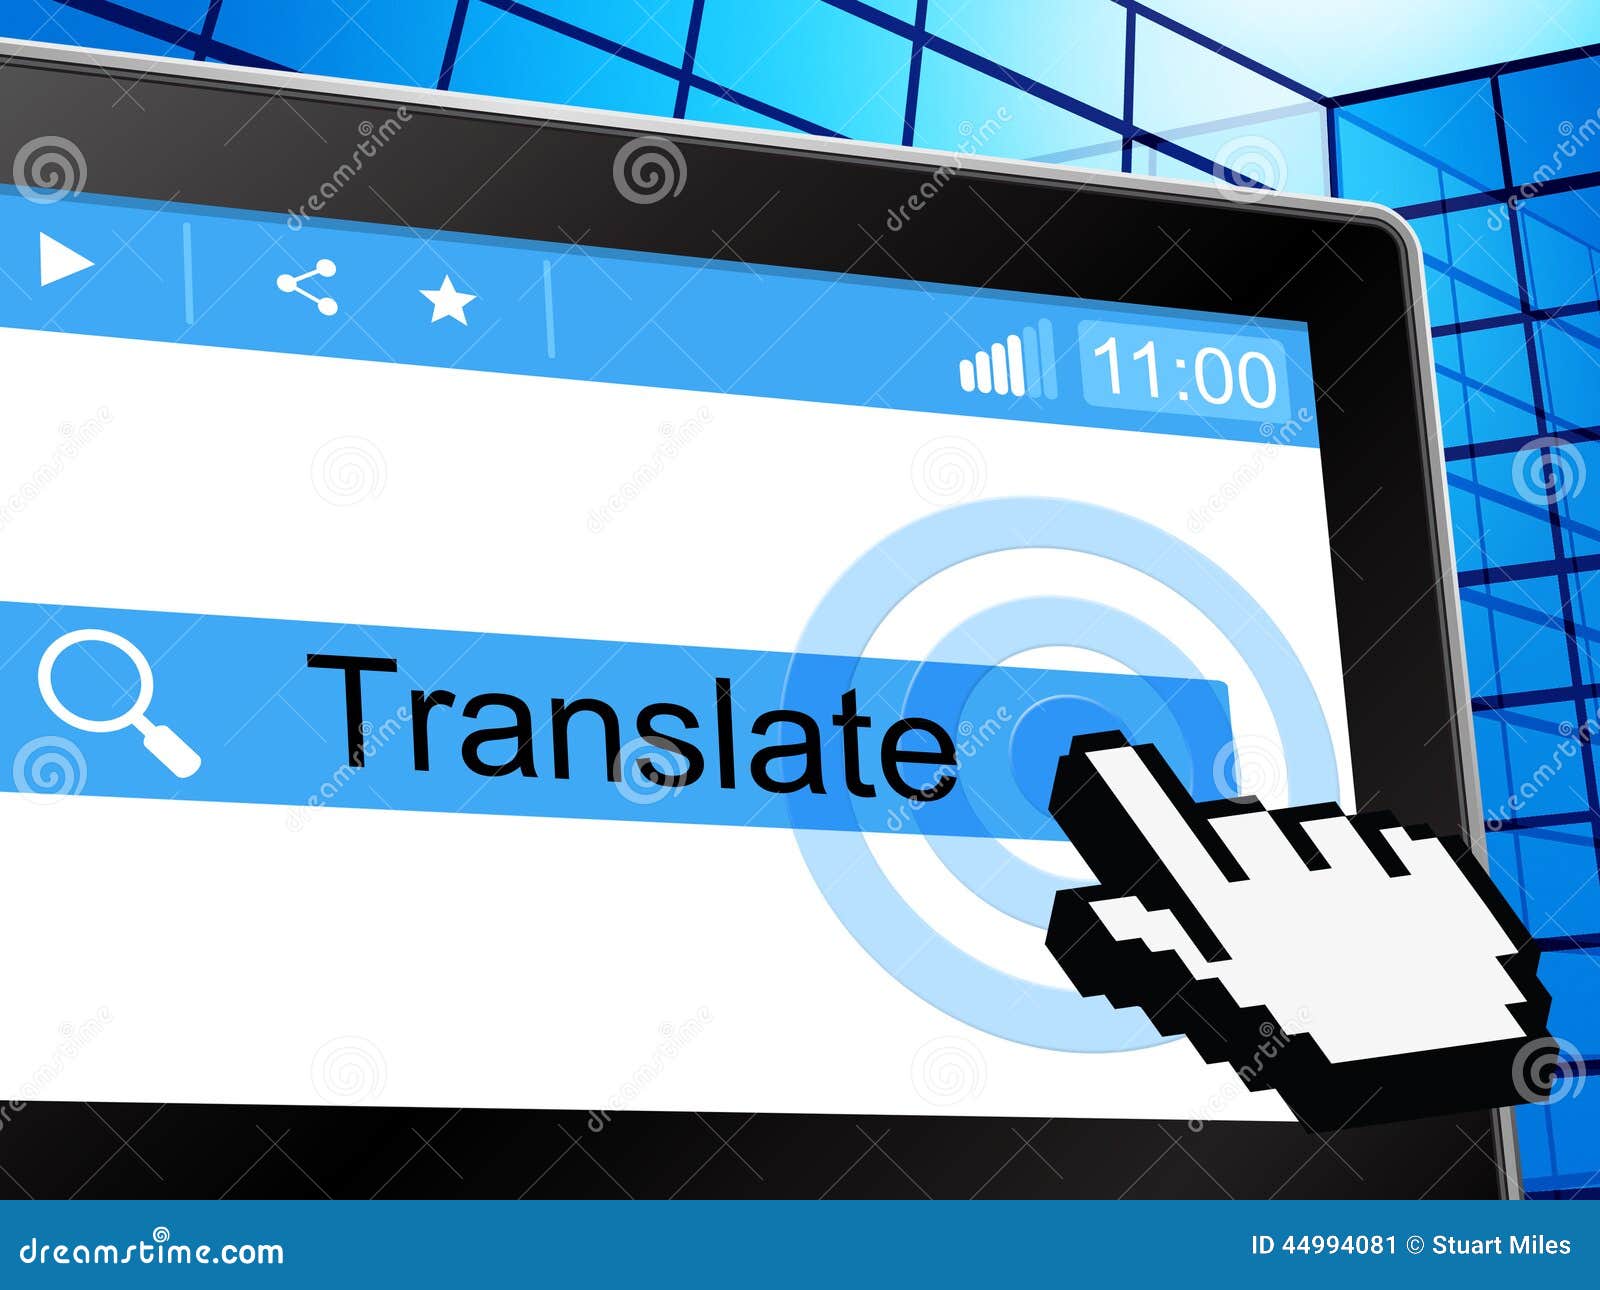 translate online indicates convert to english and language